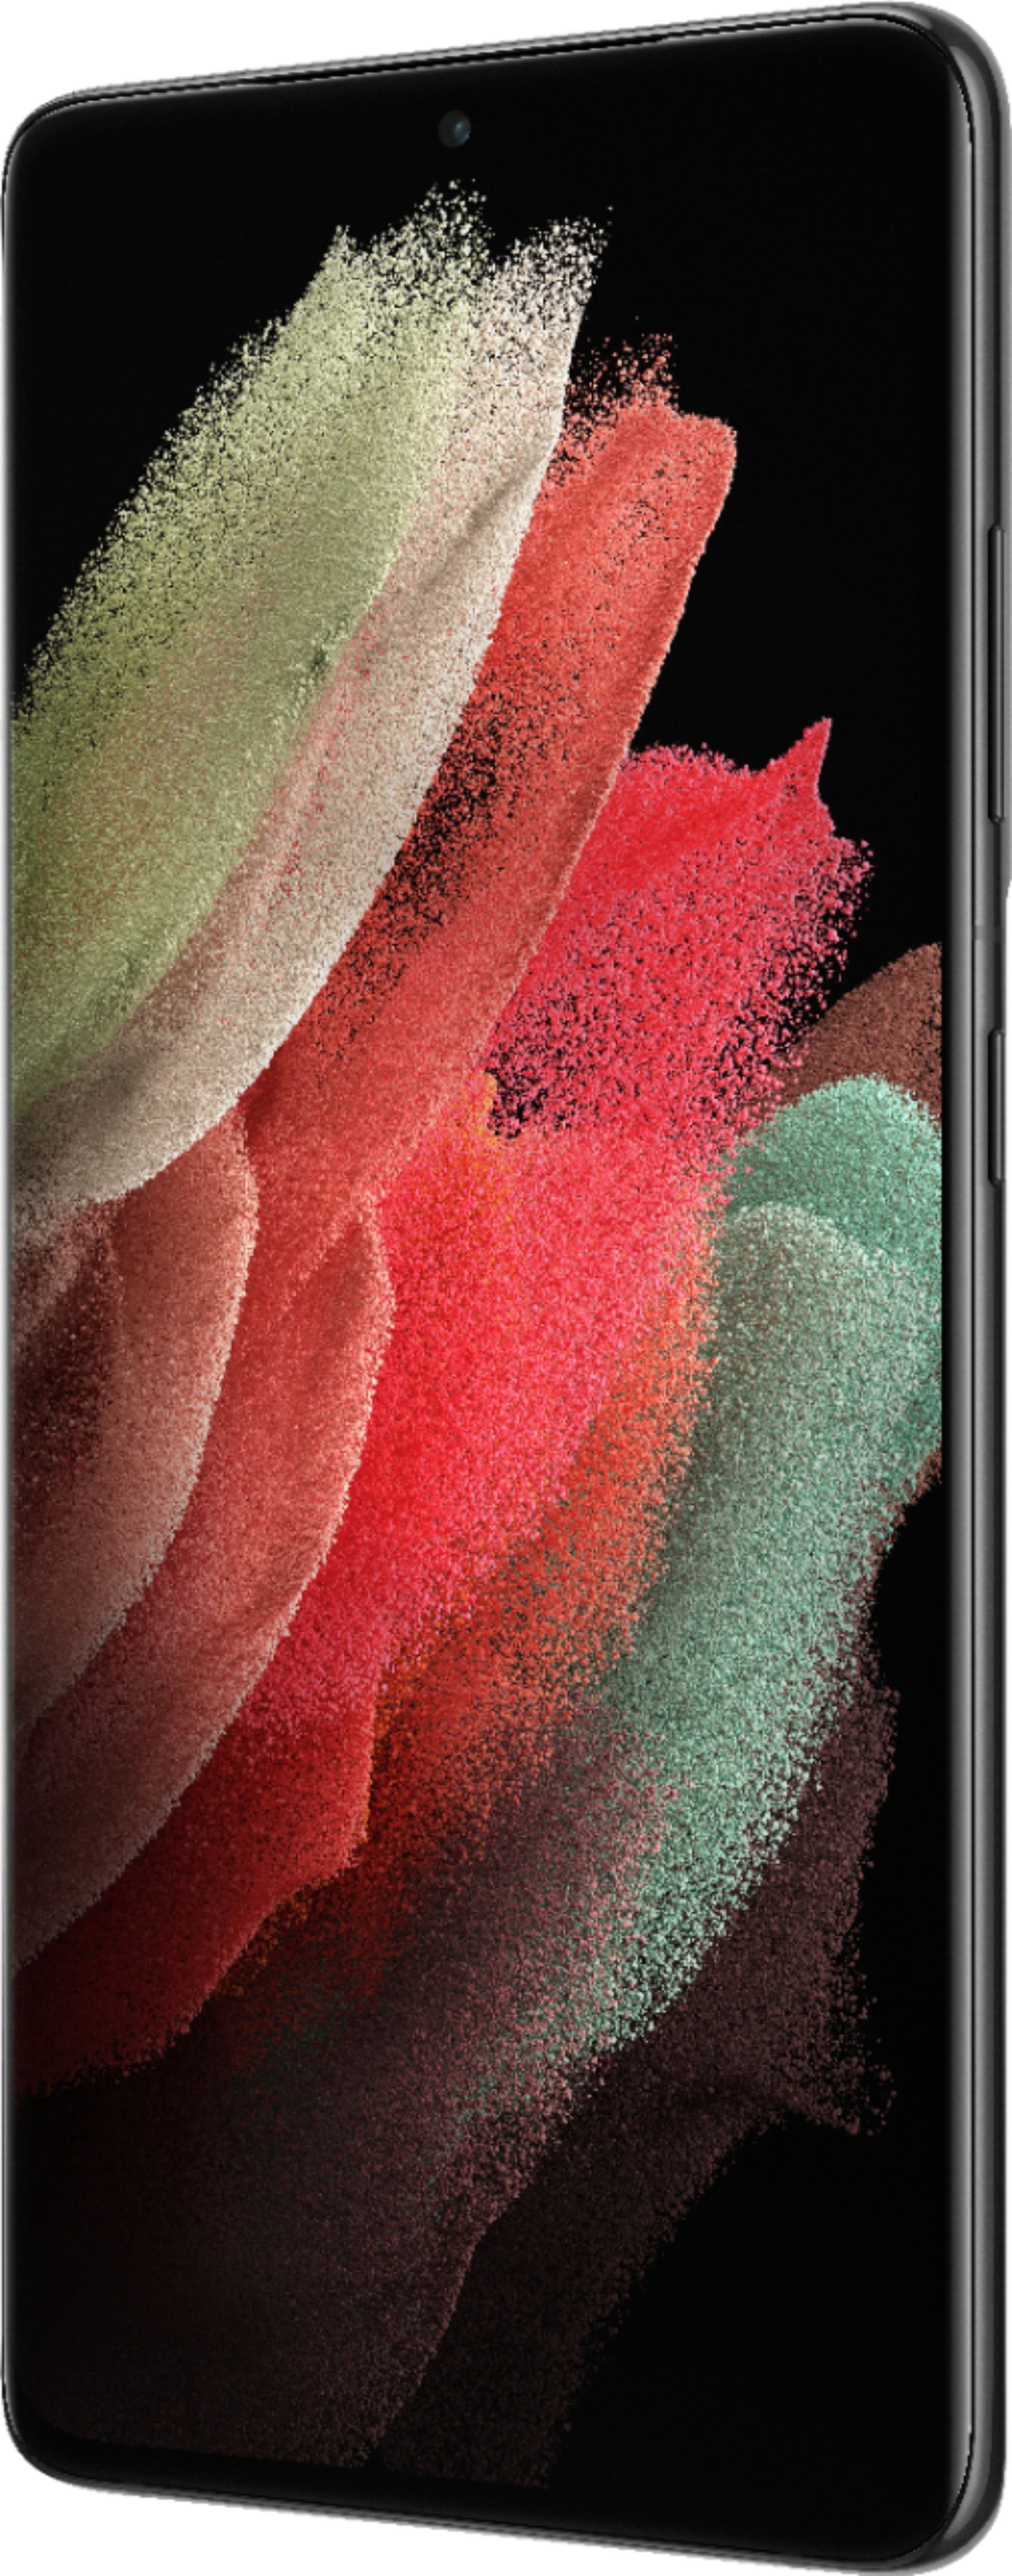  Samsung Galaxy S21 Ultra 5G, US Version, 256GB, Phantom Black  for Verizon (Renewed) : Cell Phones & Accessories